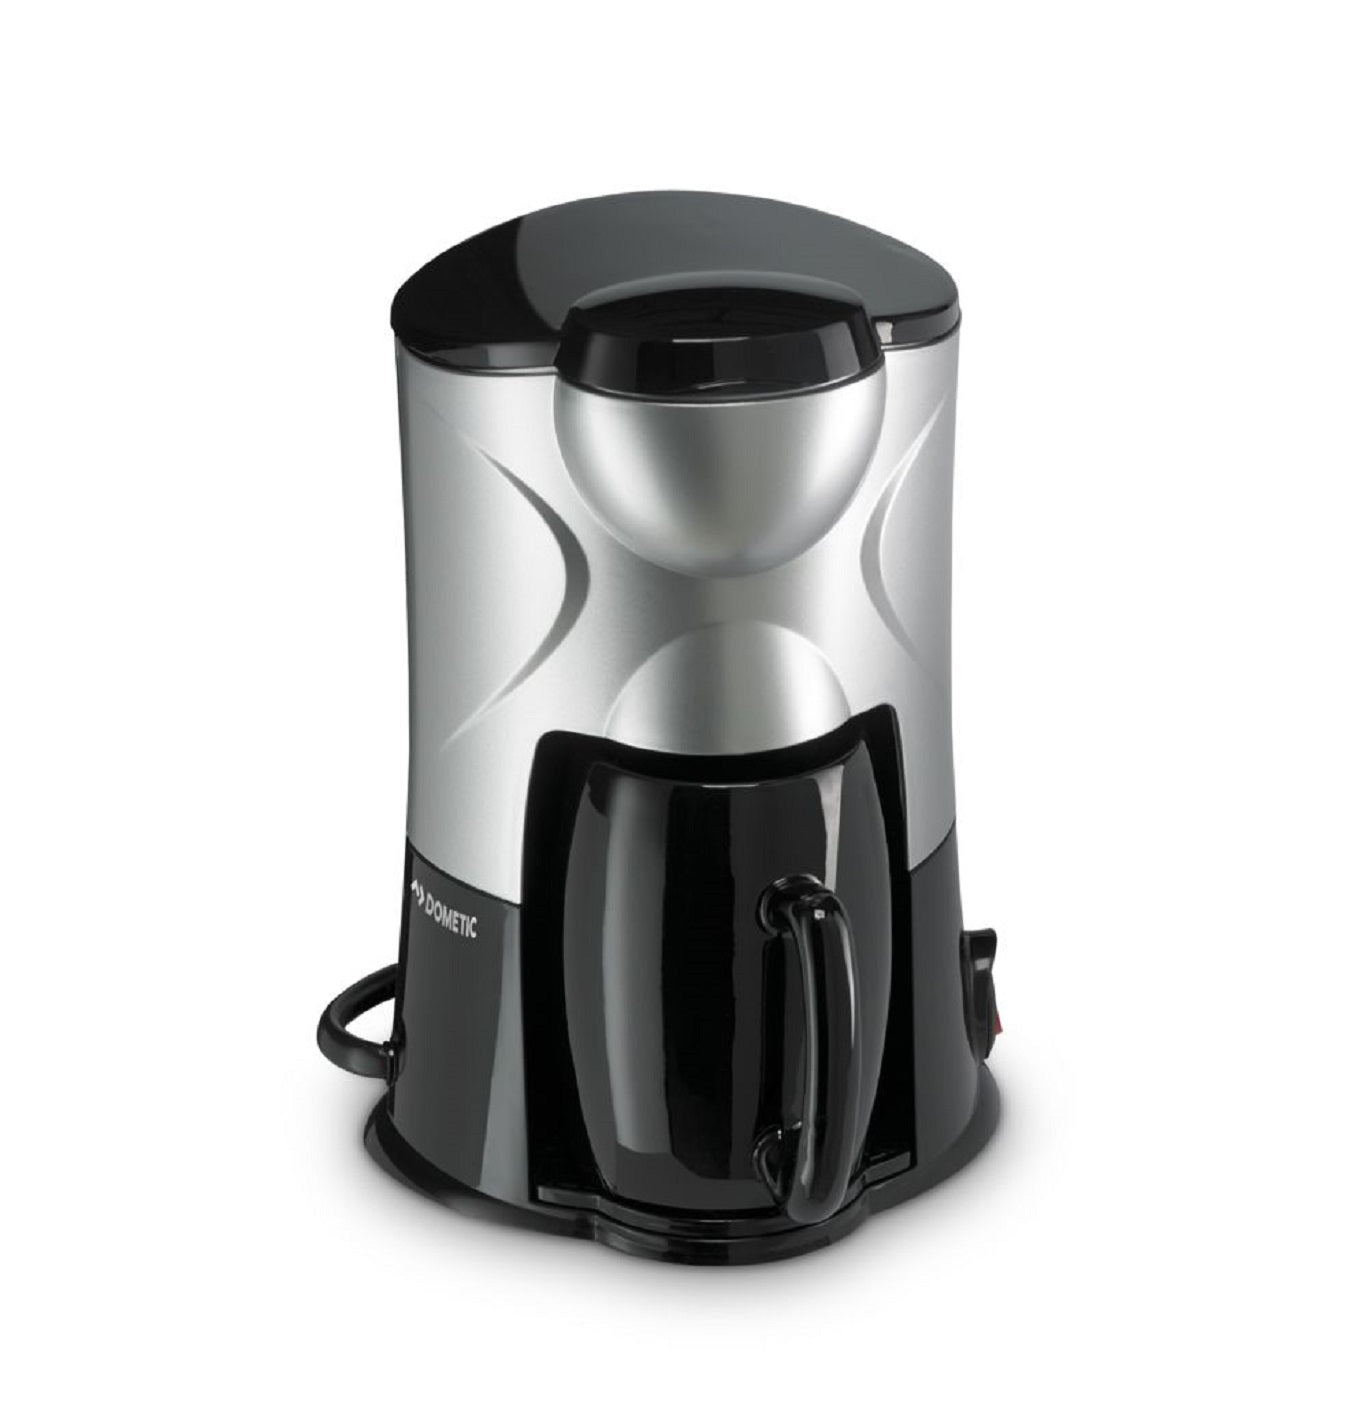 Dometic 12V PerfectCup MC 01 Single Cup Coffee Maker Image